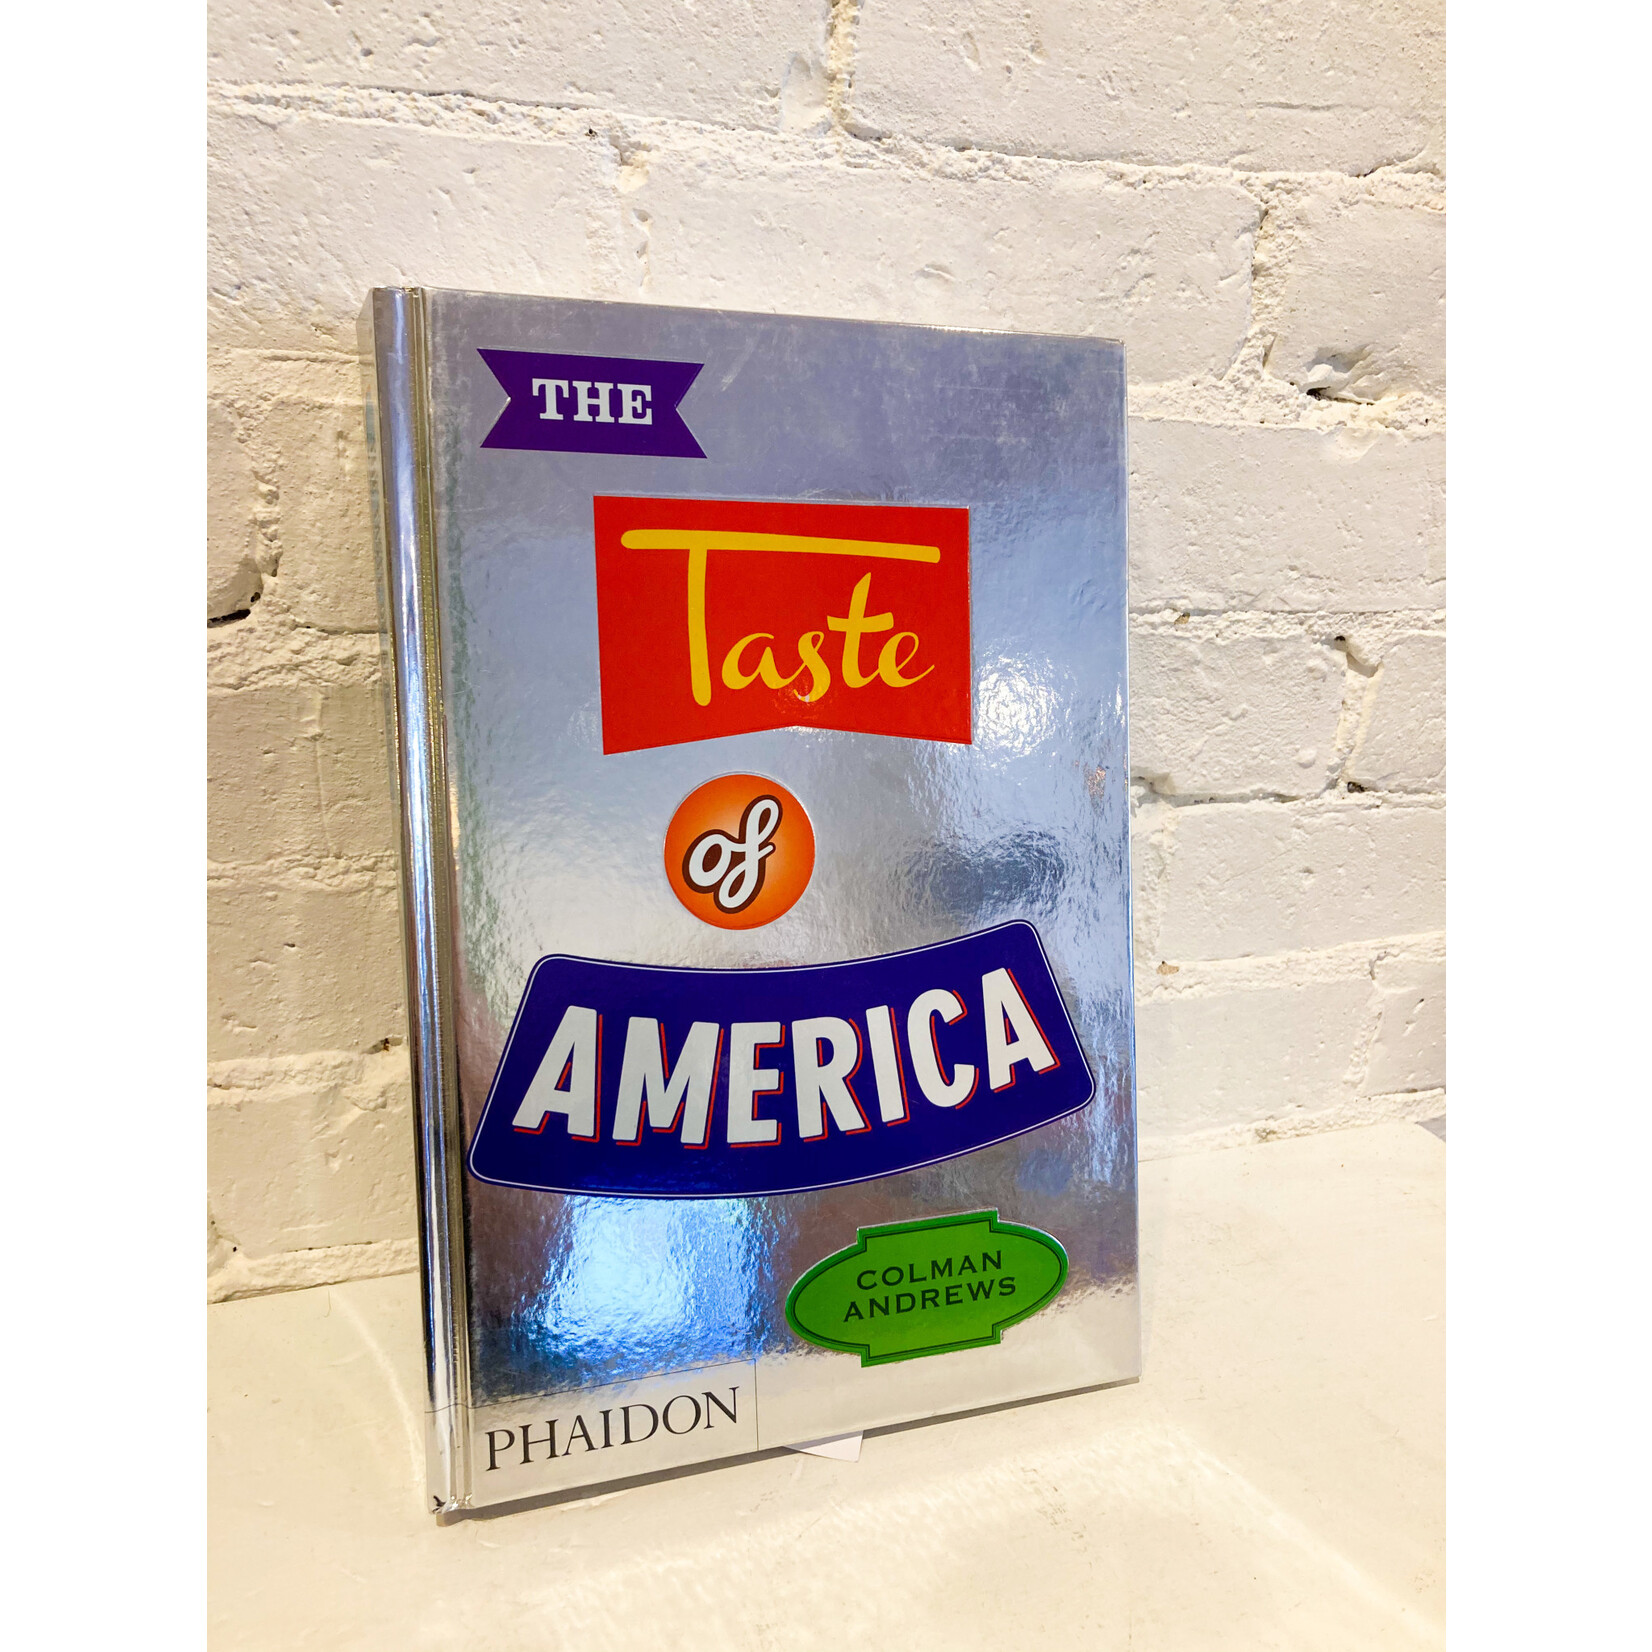 The Taste of America by Colman Andrews